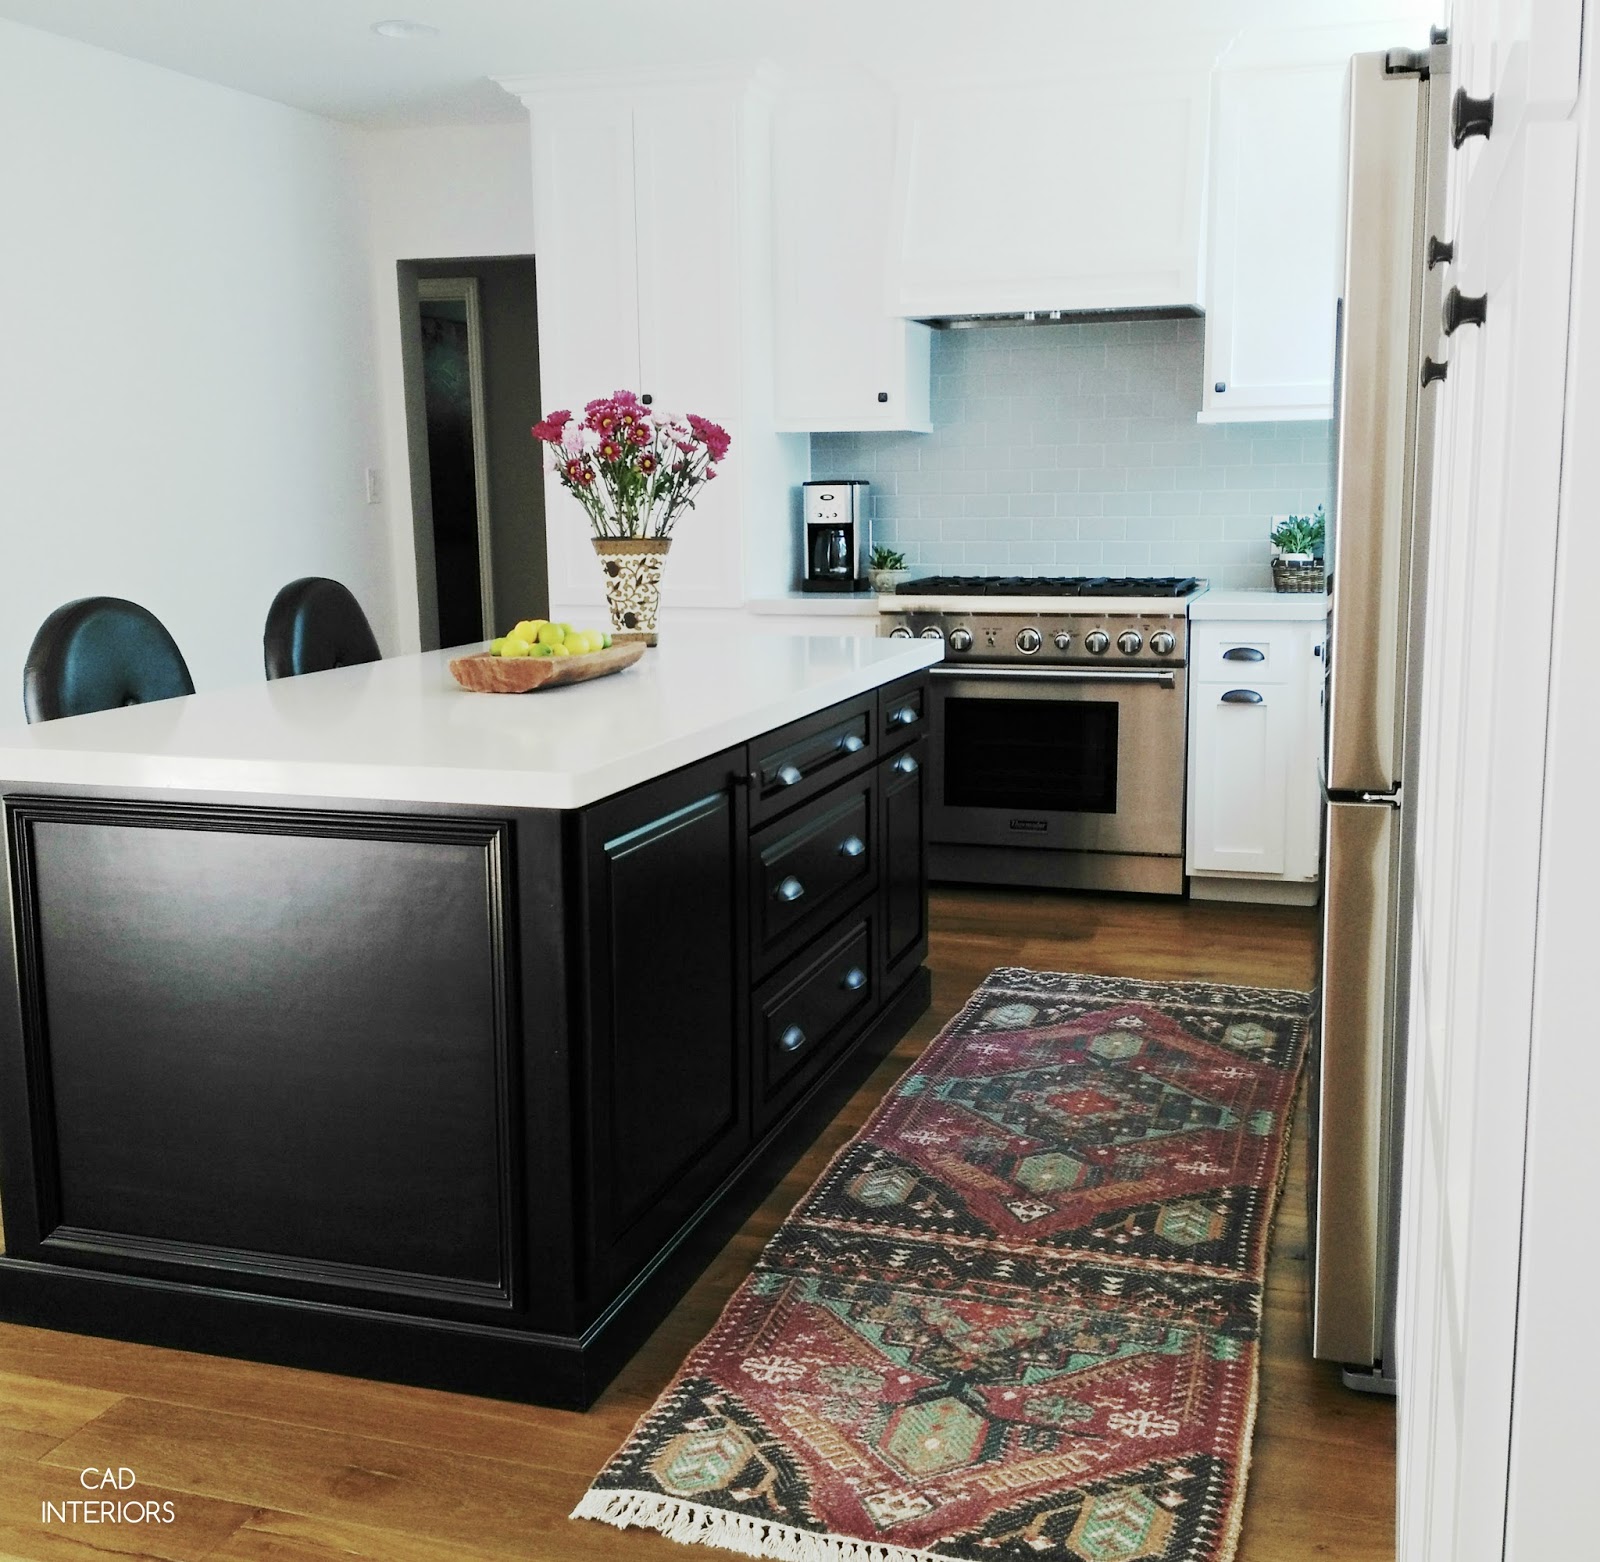 CAD INTERIORS kitchen renovation